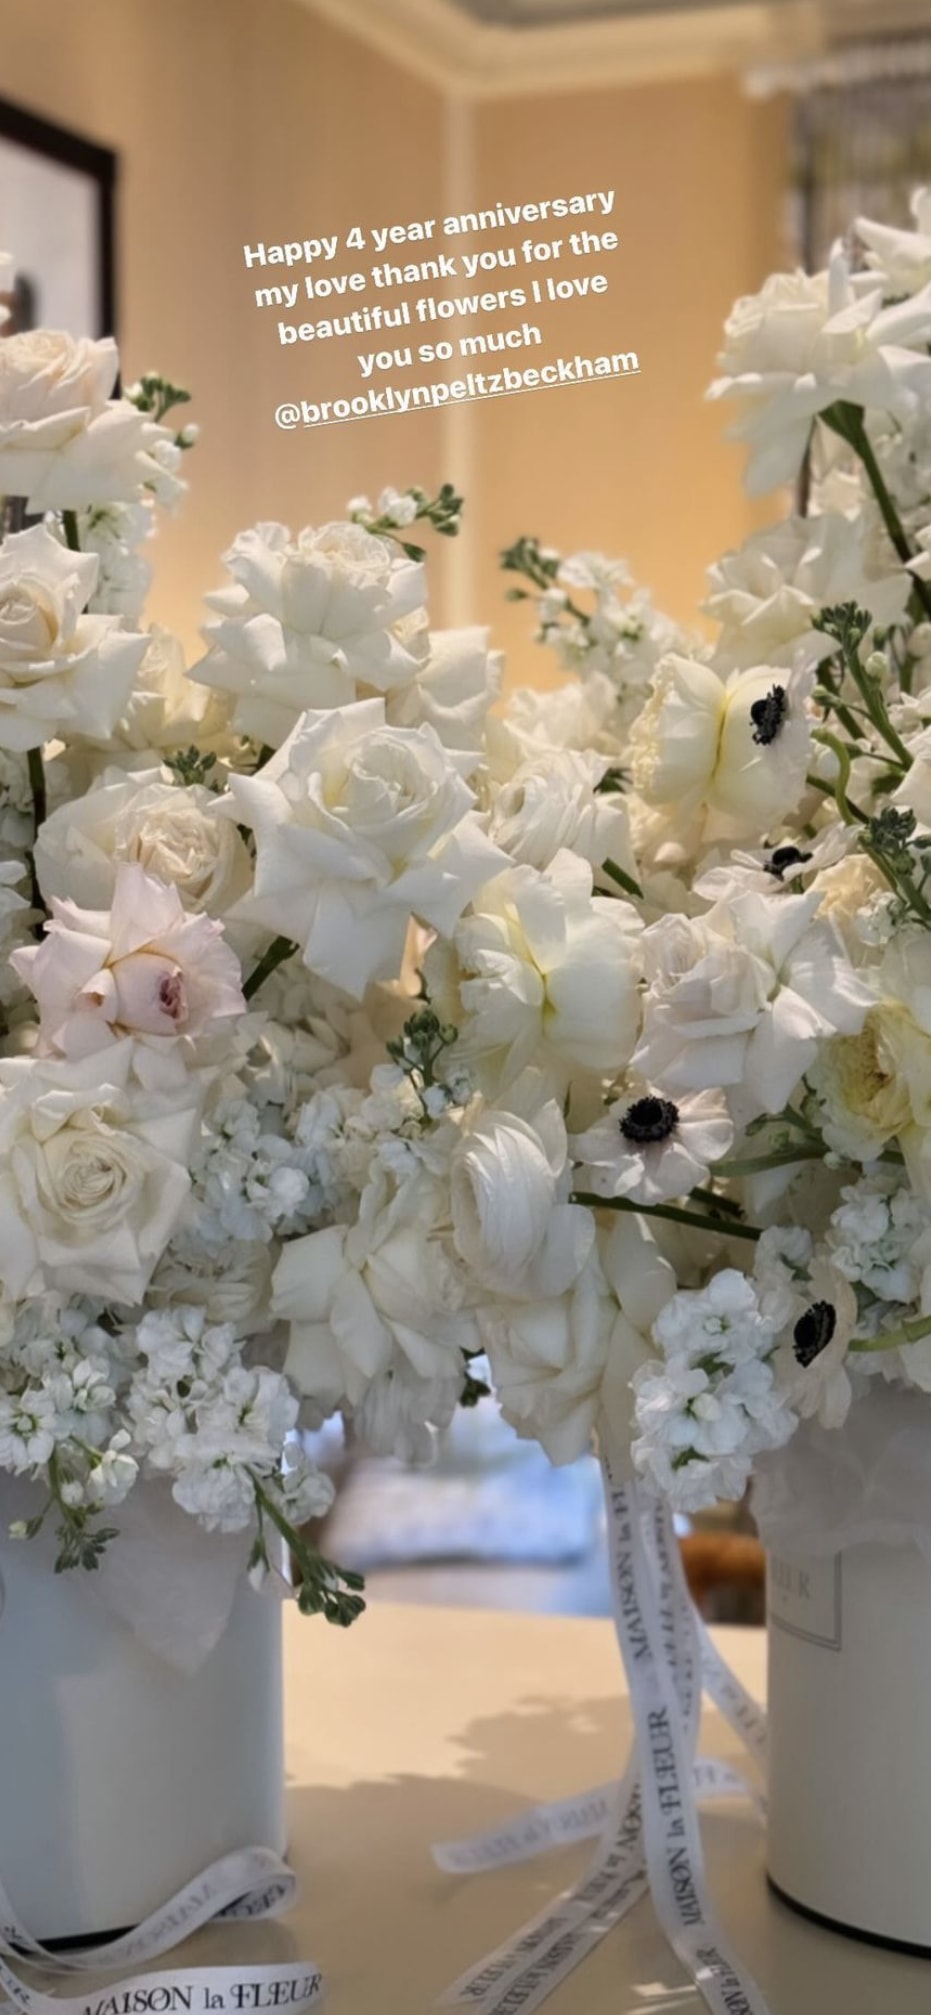 Brooklyn Beckham's white flowers